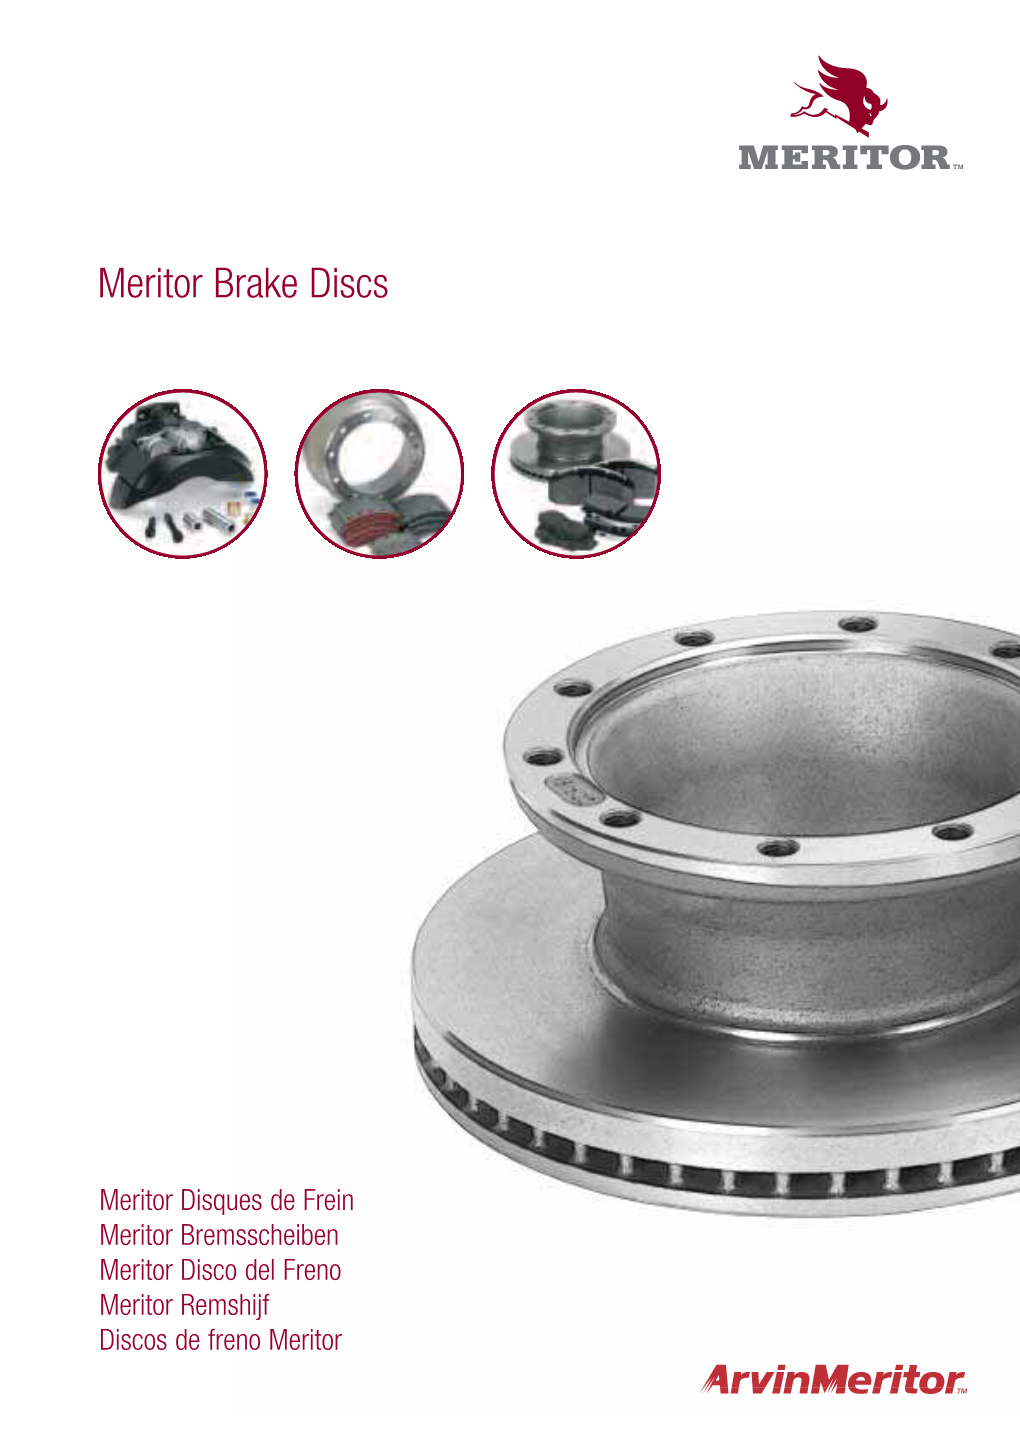 Meritor Brake Discs